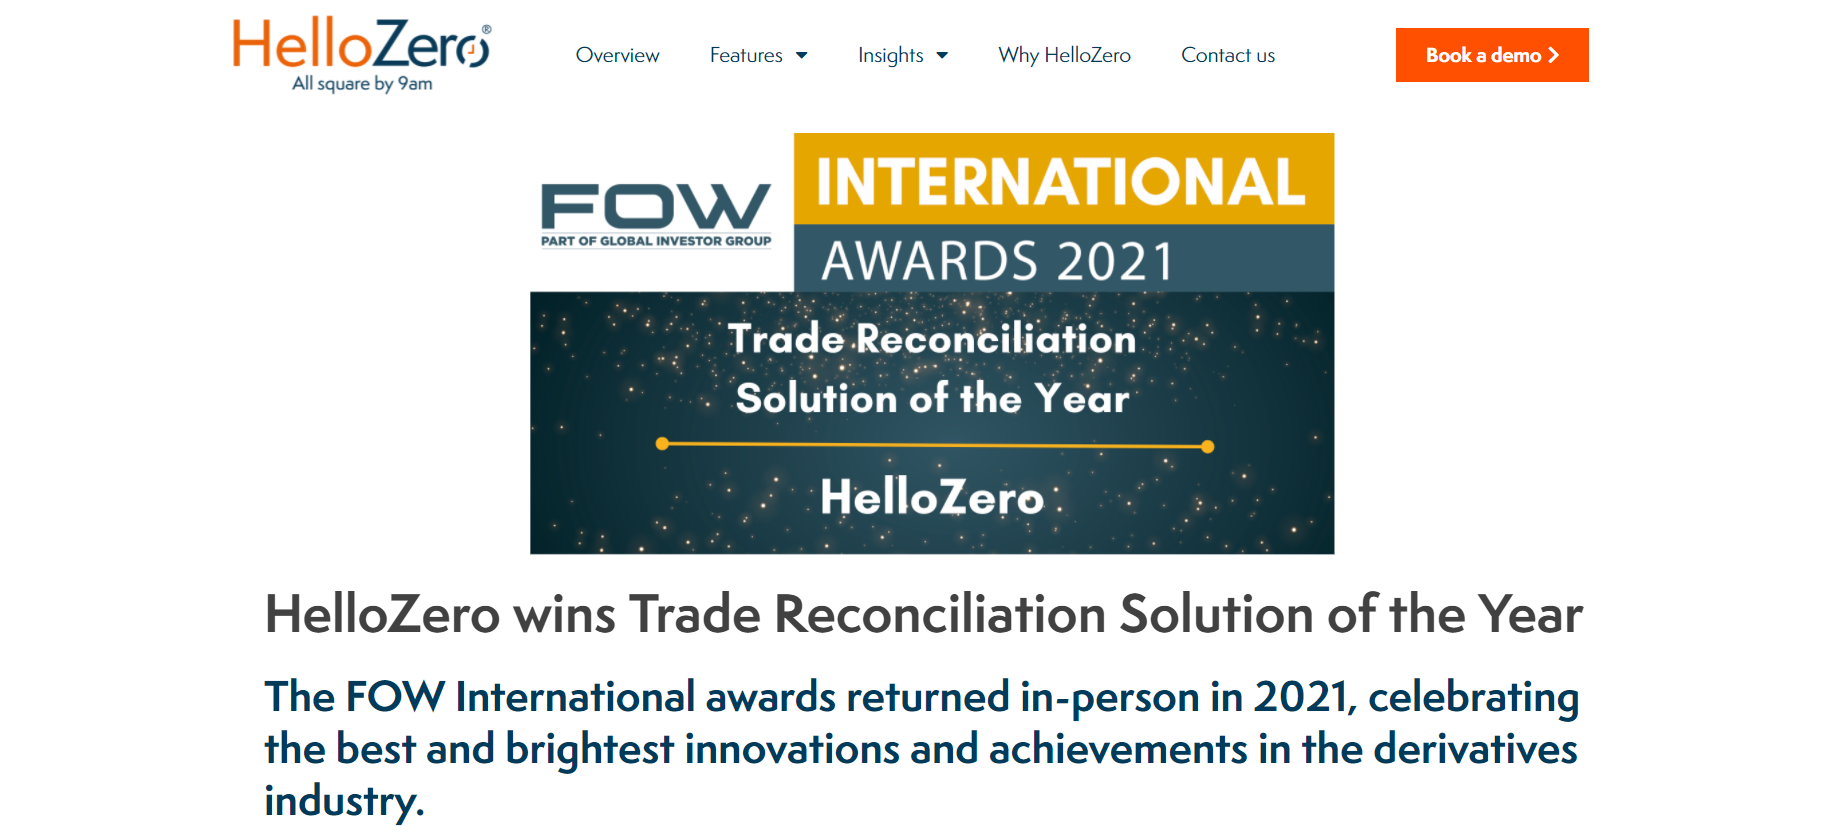 HelloZero wins "Trade Reconciliation Solution of the year" award in 2021